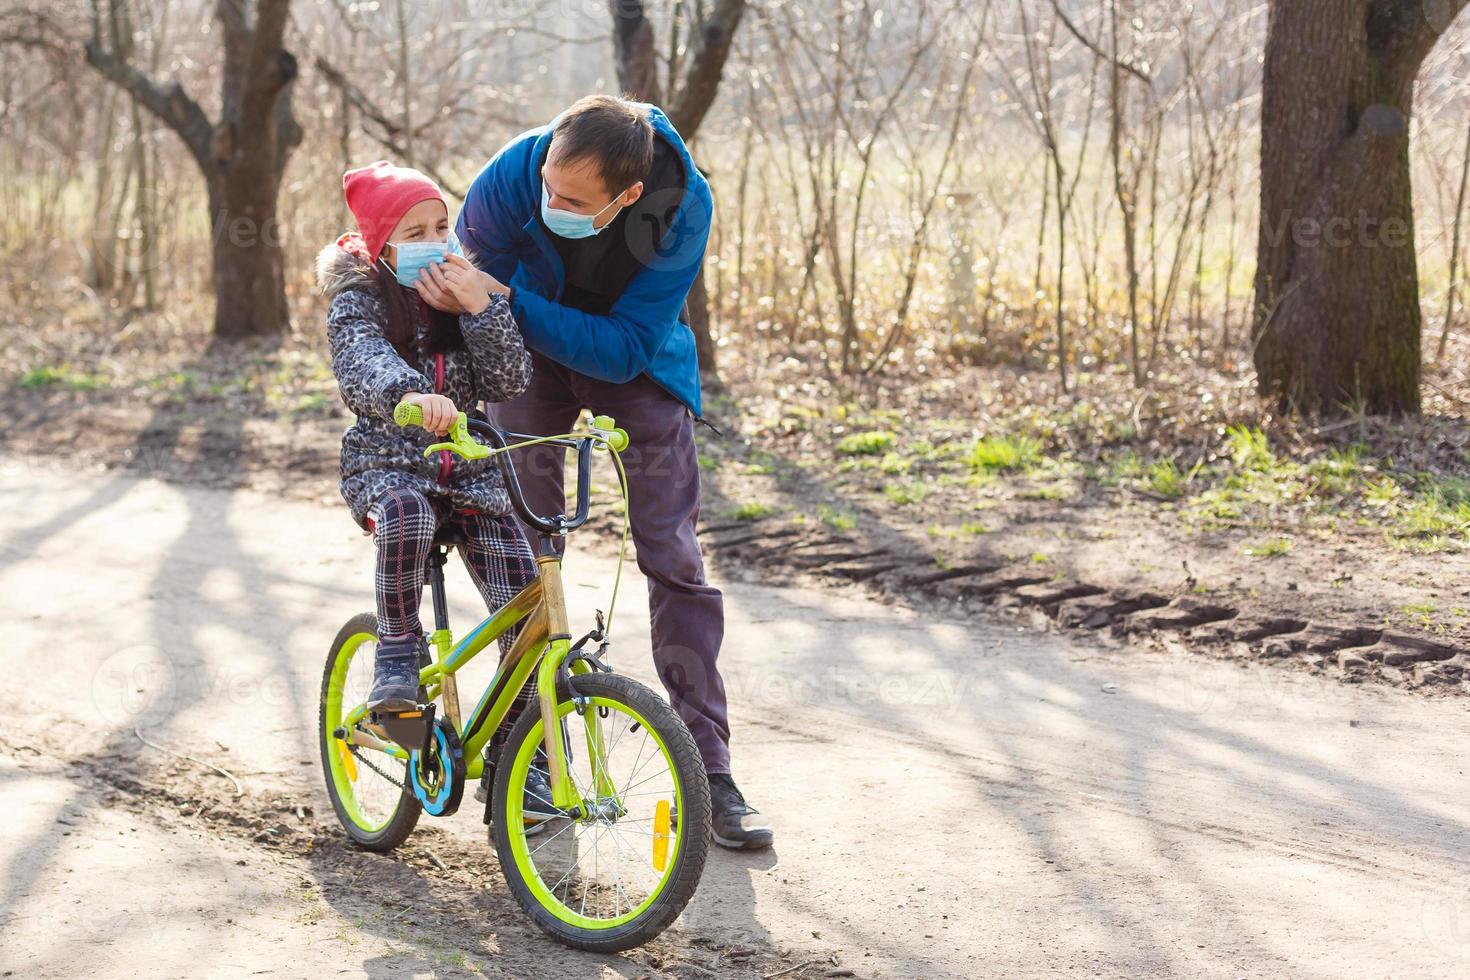 caucasiano pai ajudando filha passeio bicicleta vestindo proteção mascarar para proteger pm2.5 e coronavírus covid-19 pandemia vírus sintomas. foto